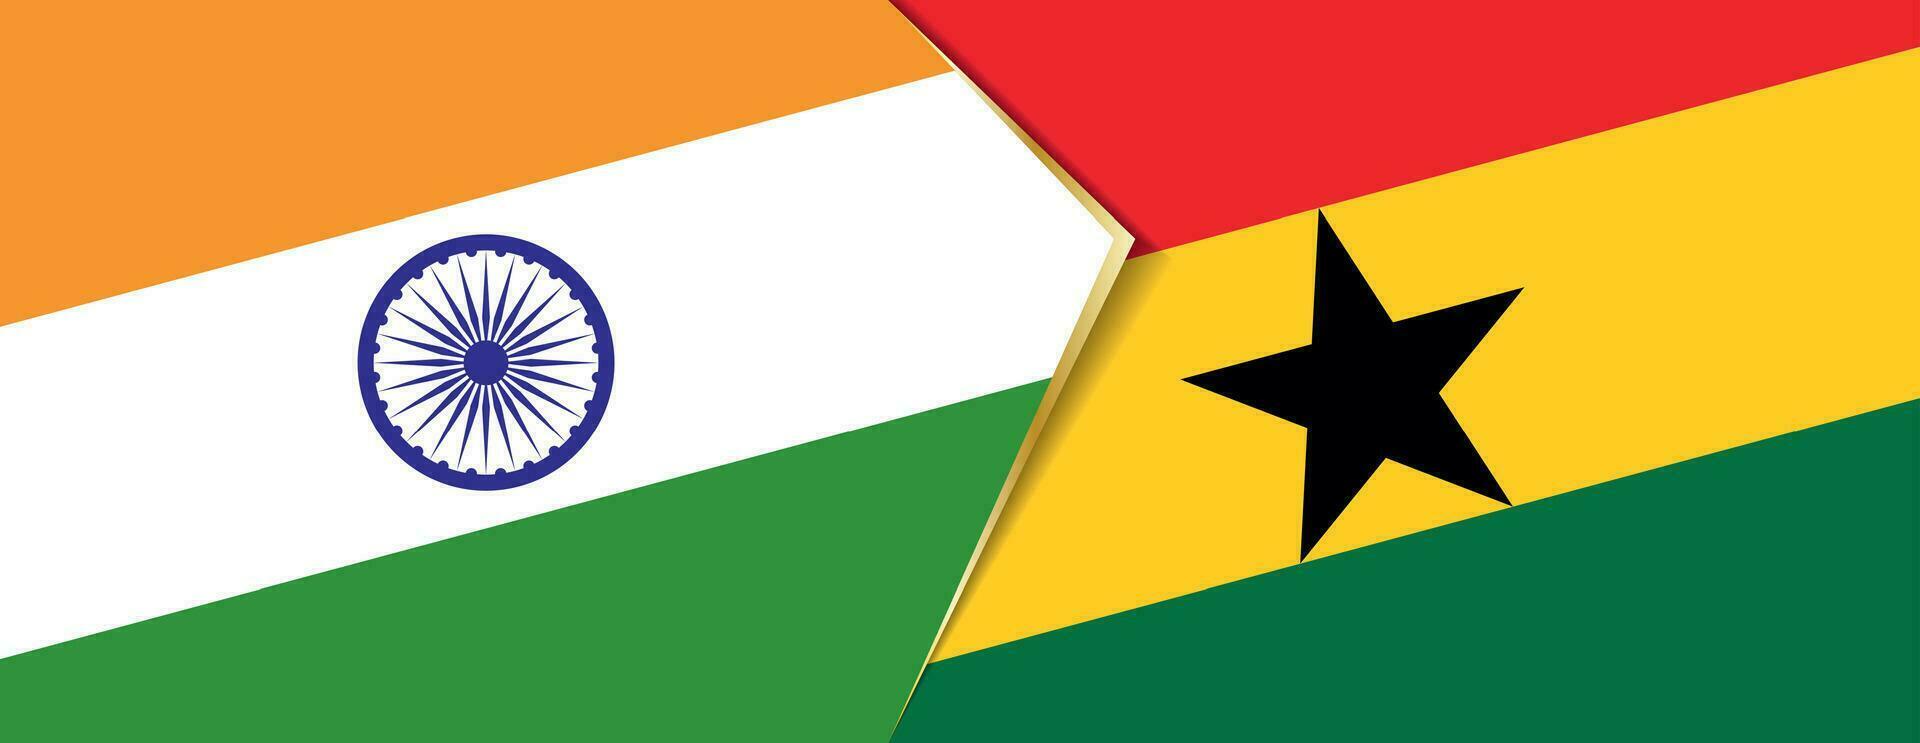 India e Ghana bandiere, Due vettore bandiere.